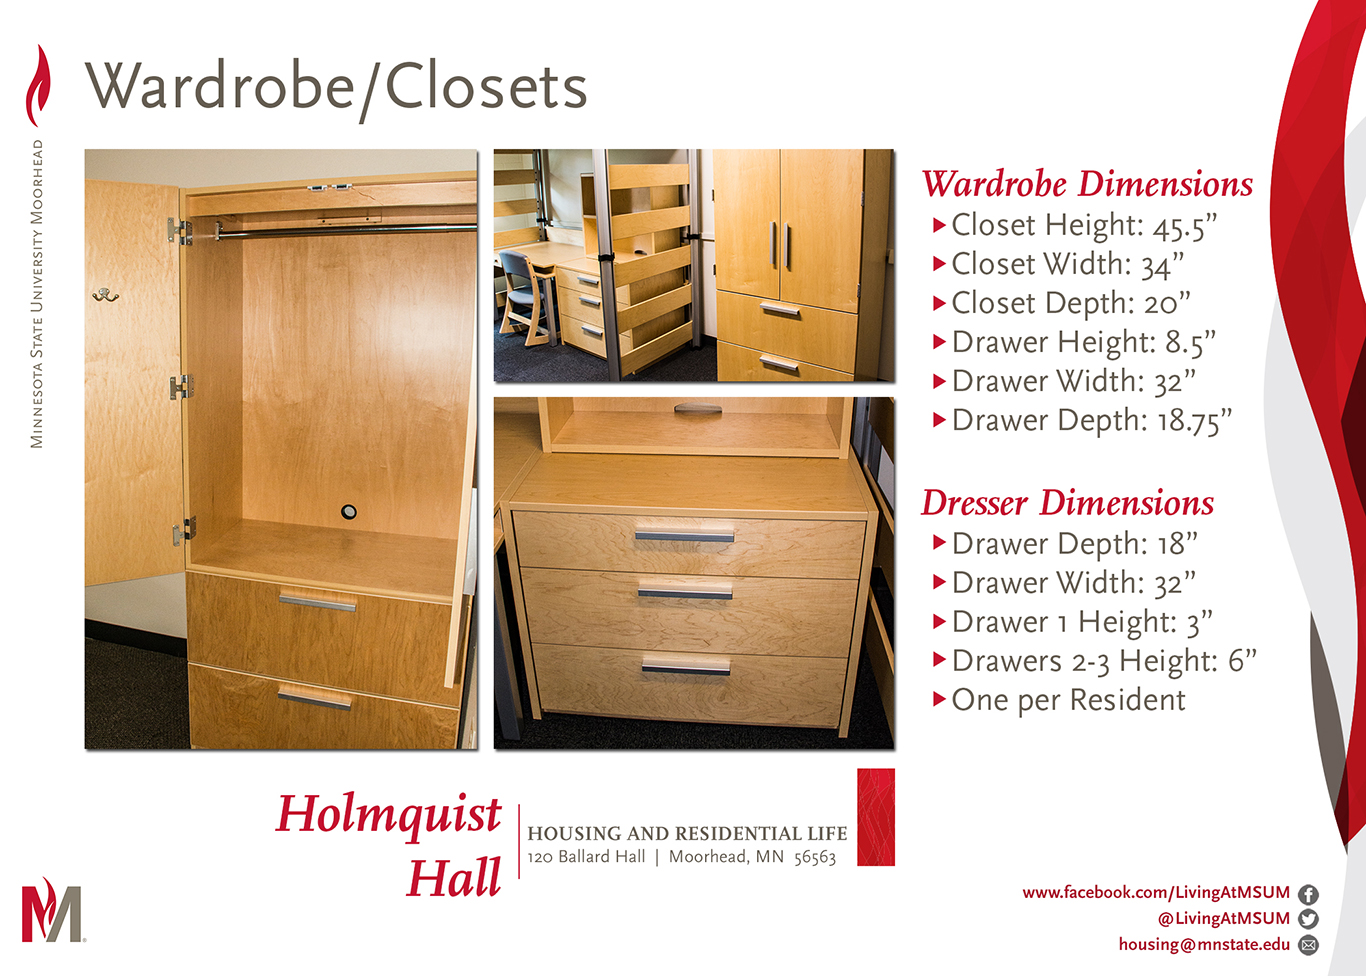 Holmquist Hall Wardrobe